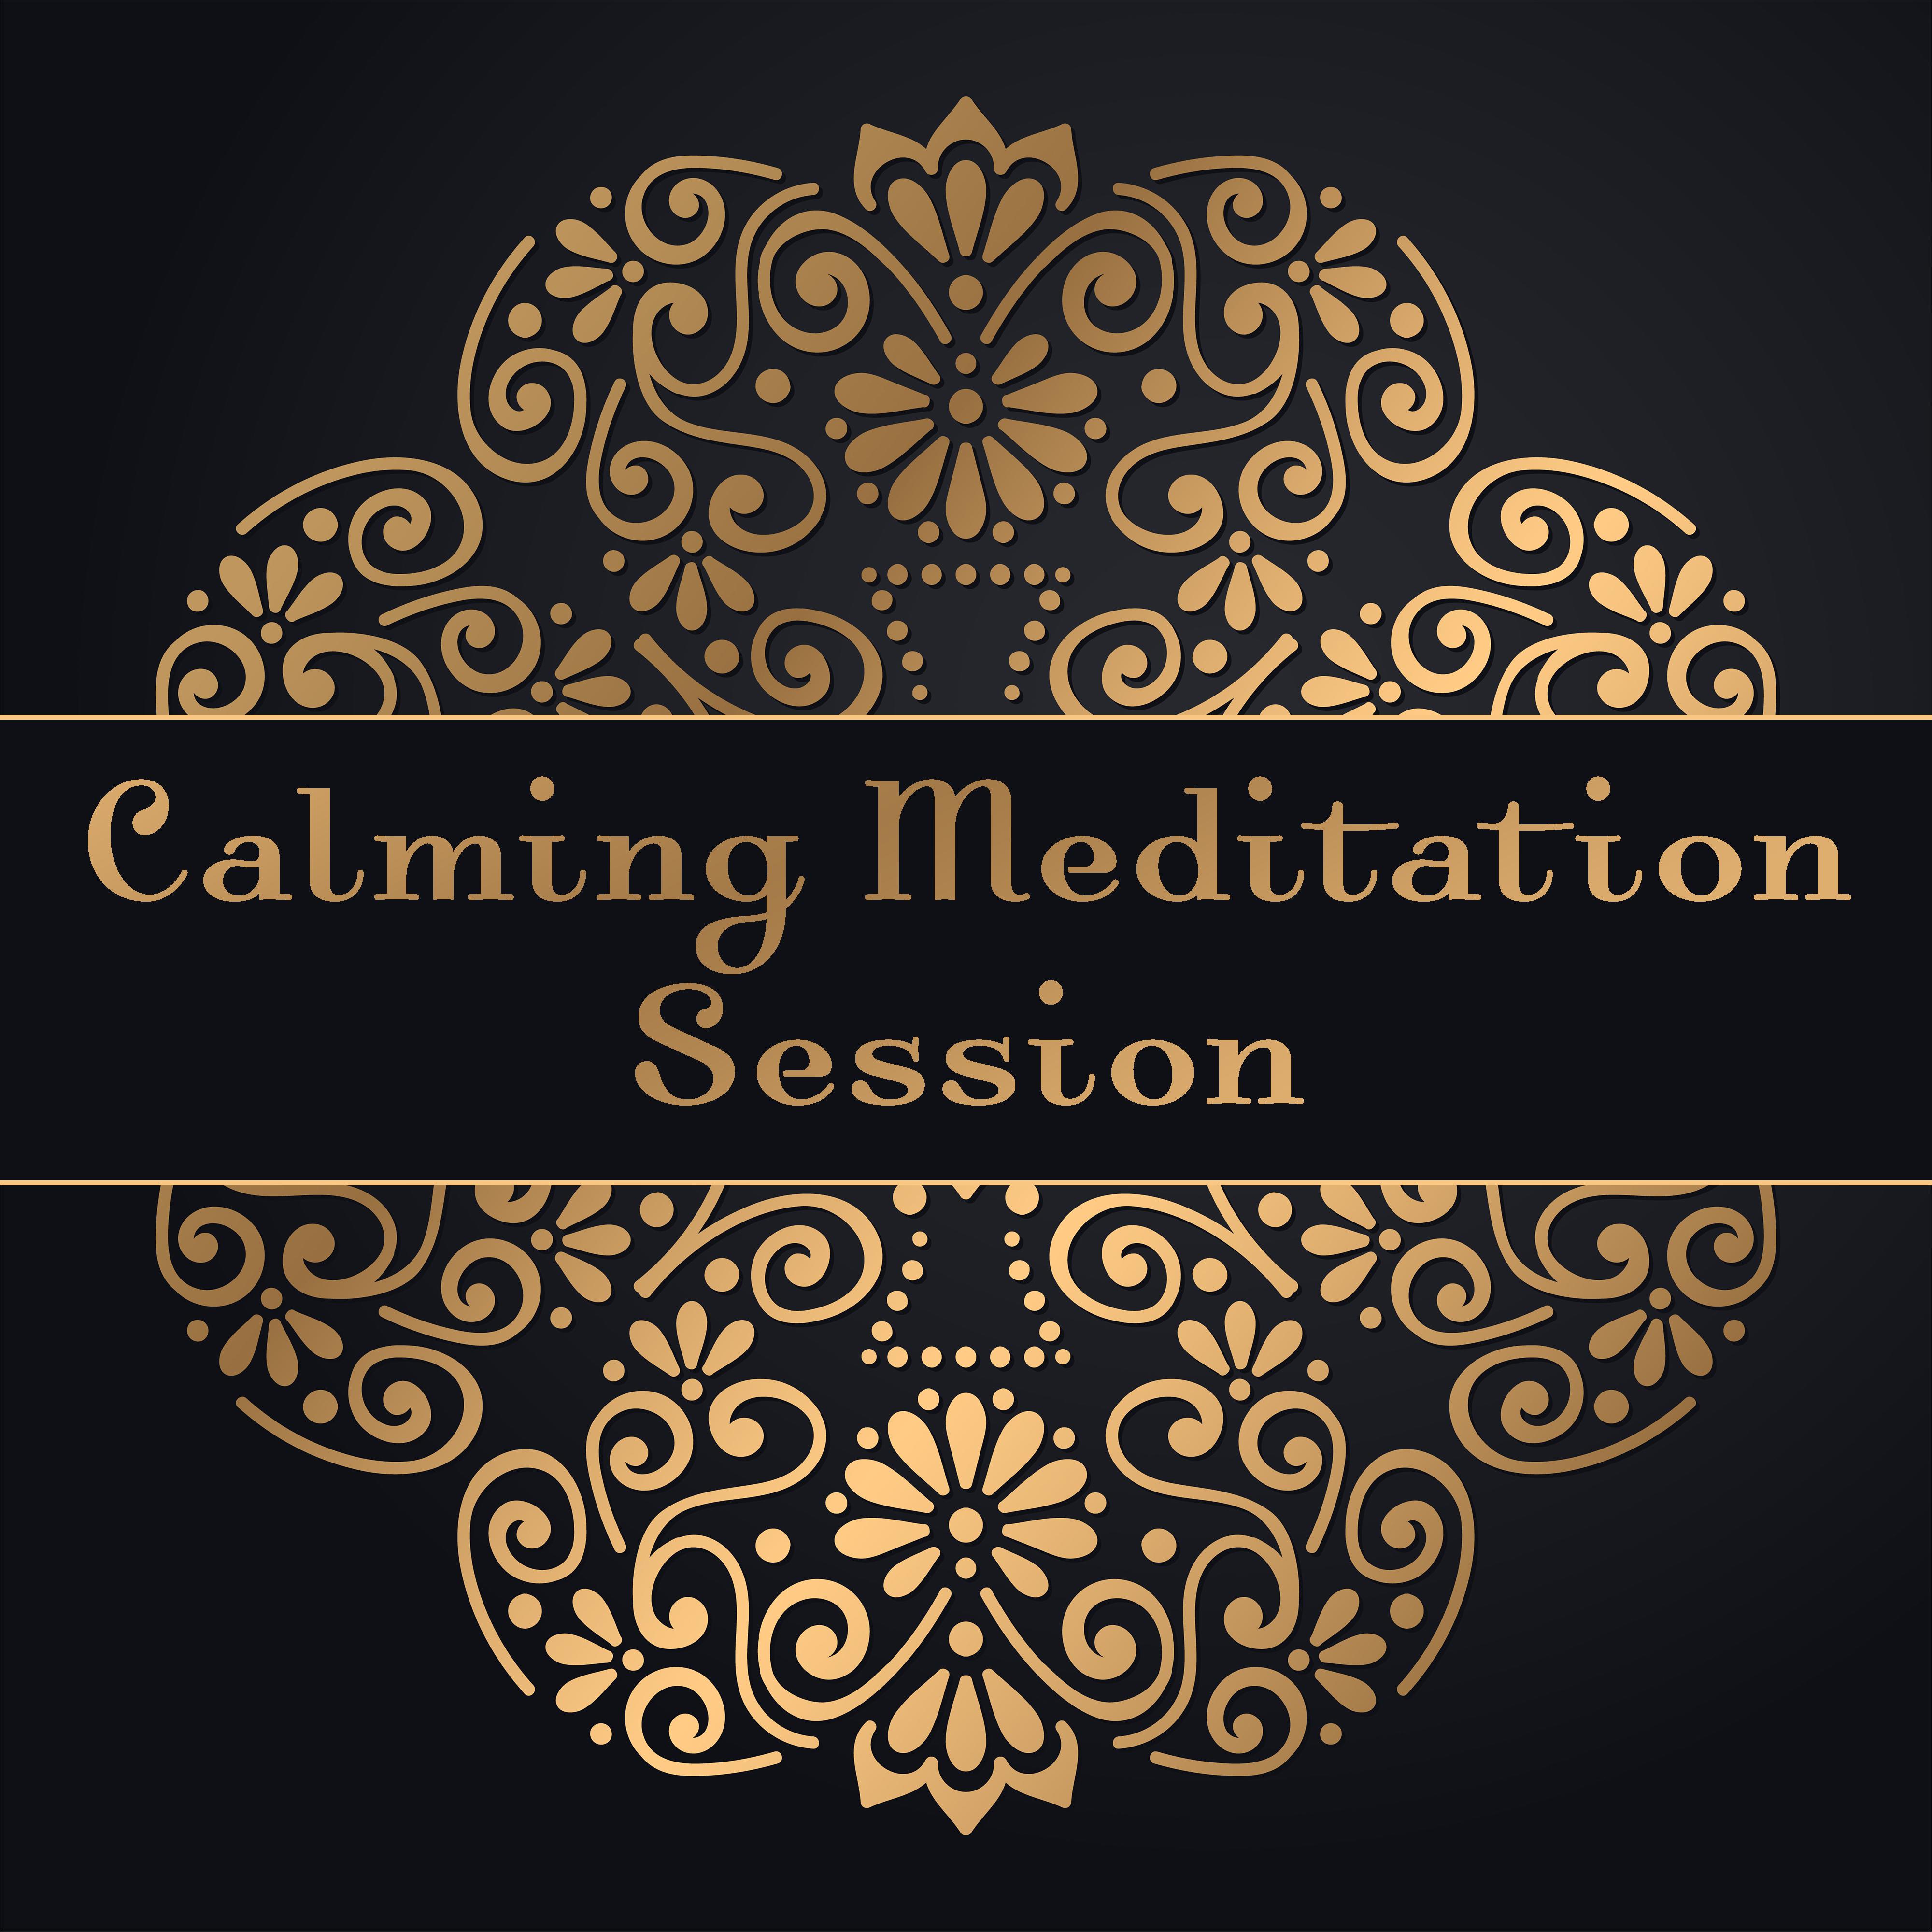 Calming Meditation Session